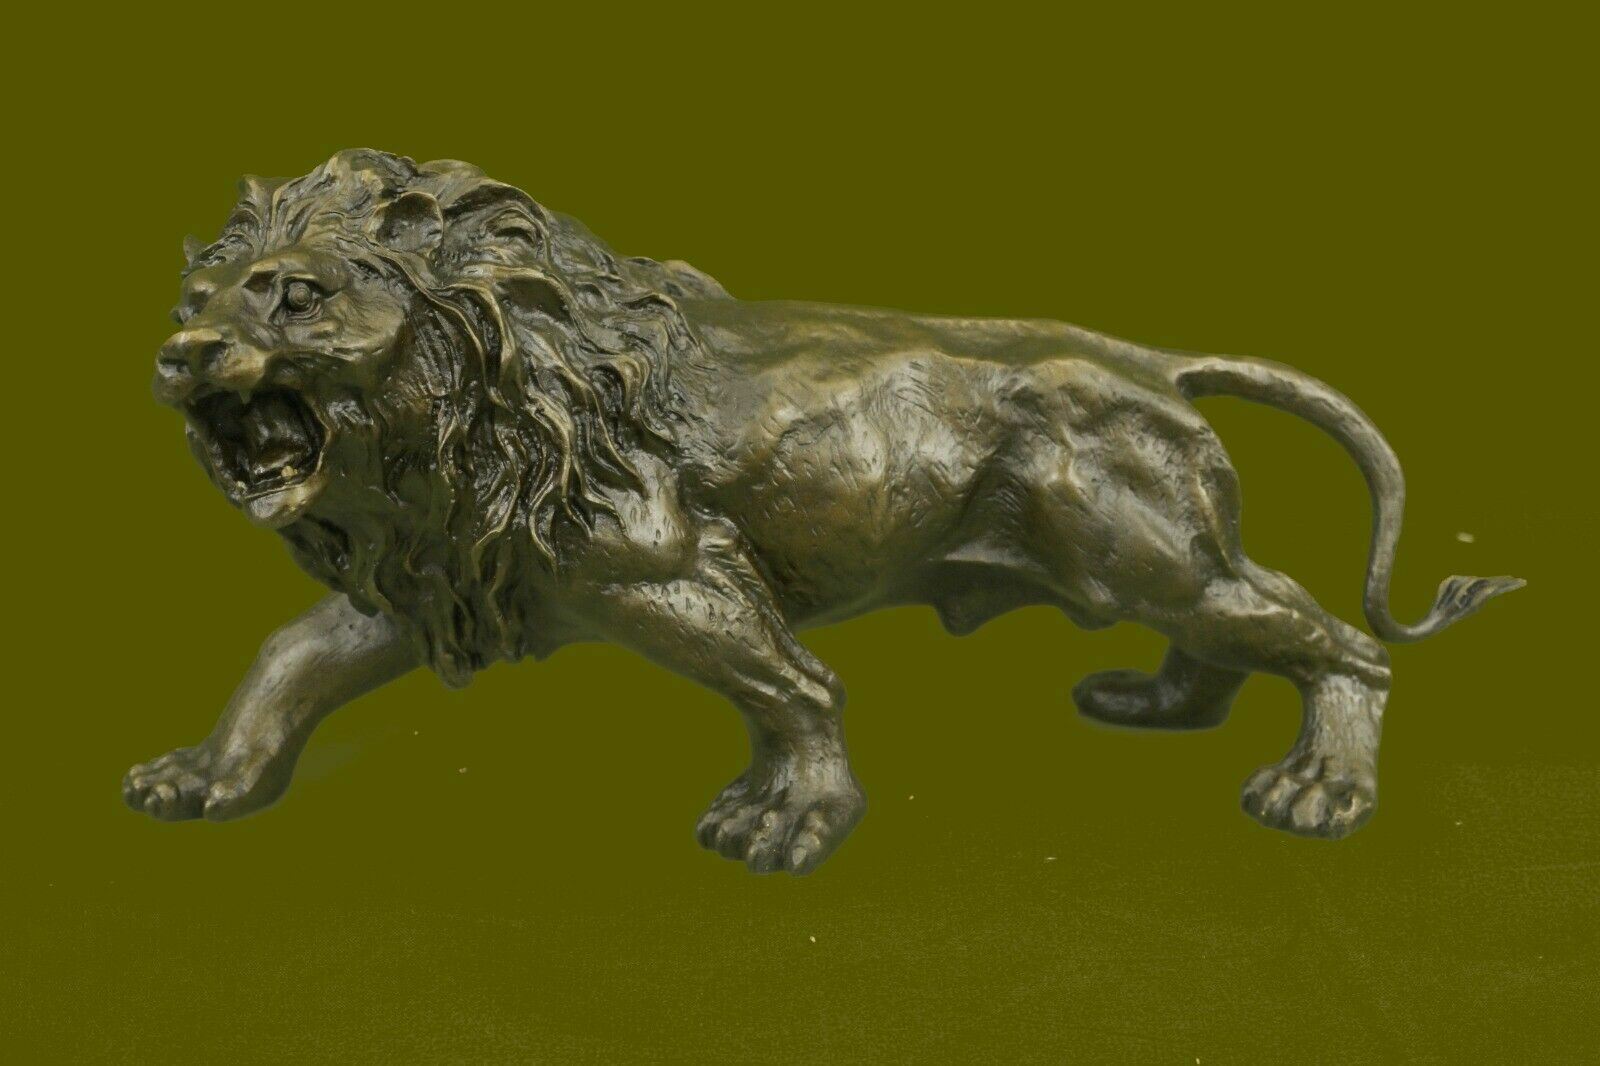 Handcrafted bronze sculpture SALE Deco Art Lion African Wildlife Cast Hot Decor